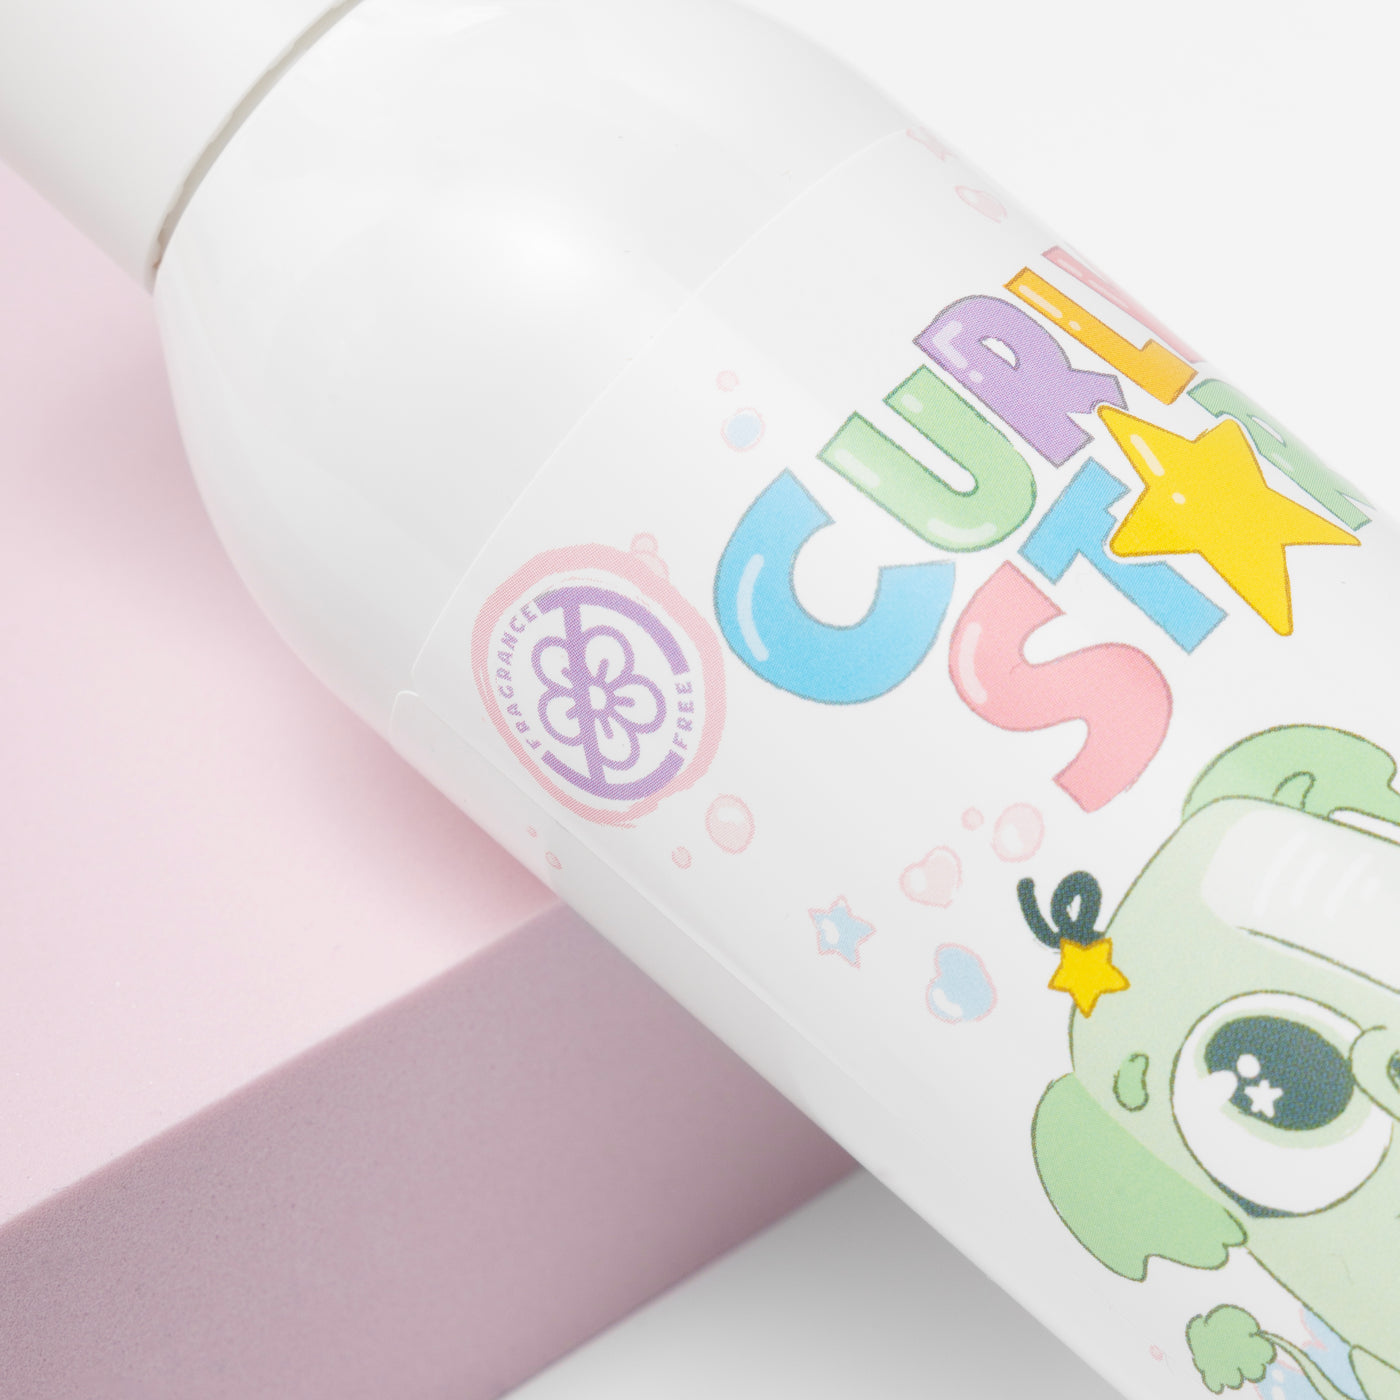 Curly Star - Gentle Shampoo 250ml - No Parfum